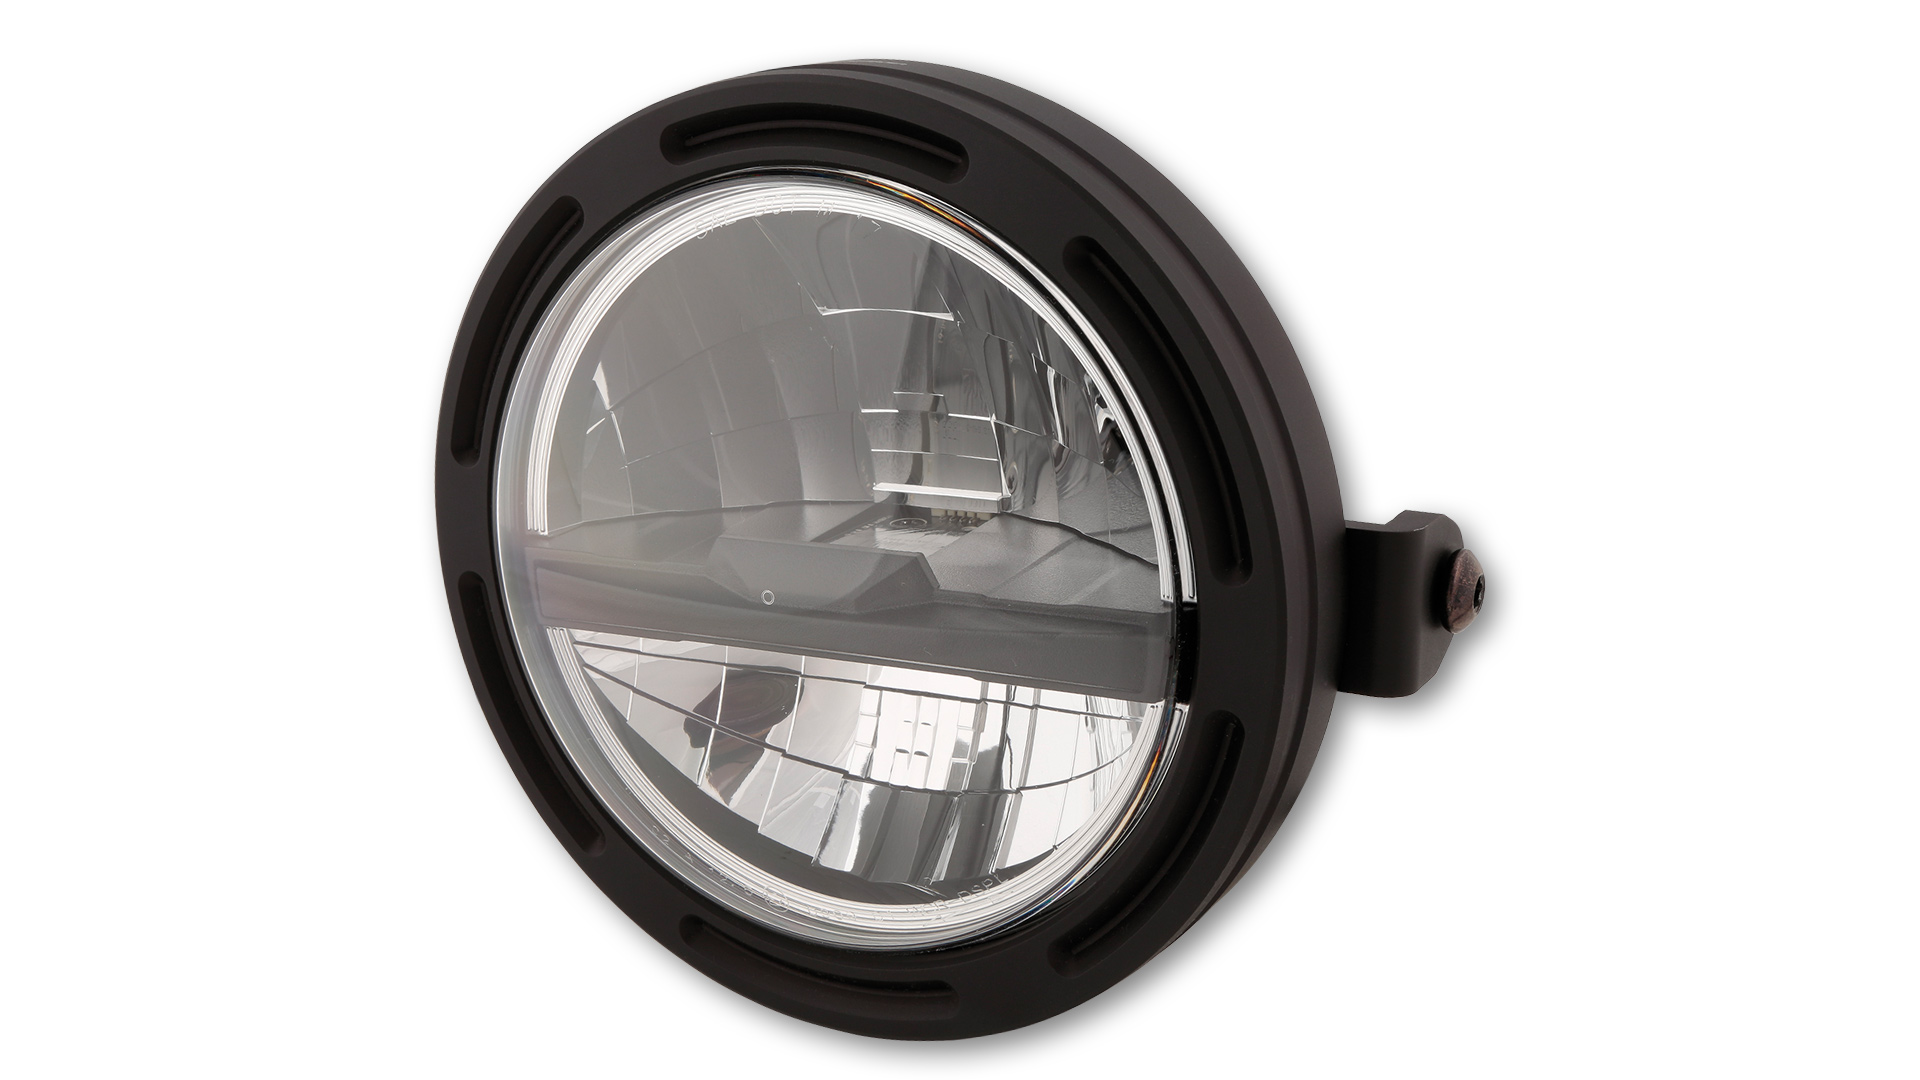 5 3/4 pulgadas Faro principal LED FRAME-R2 TIPO 5 con función de luz de posición, redondo con reflector cromado, bisel negro y cristal transparente. Disponible con montaje lateral o inferior, E-approved.